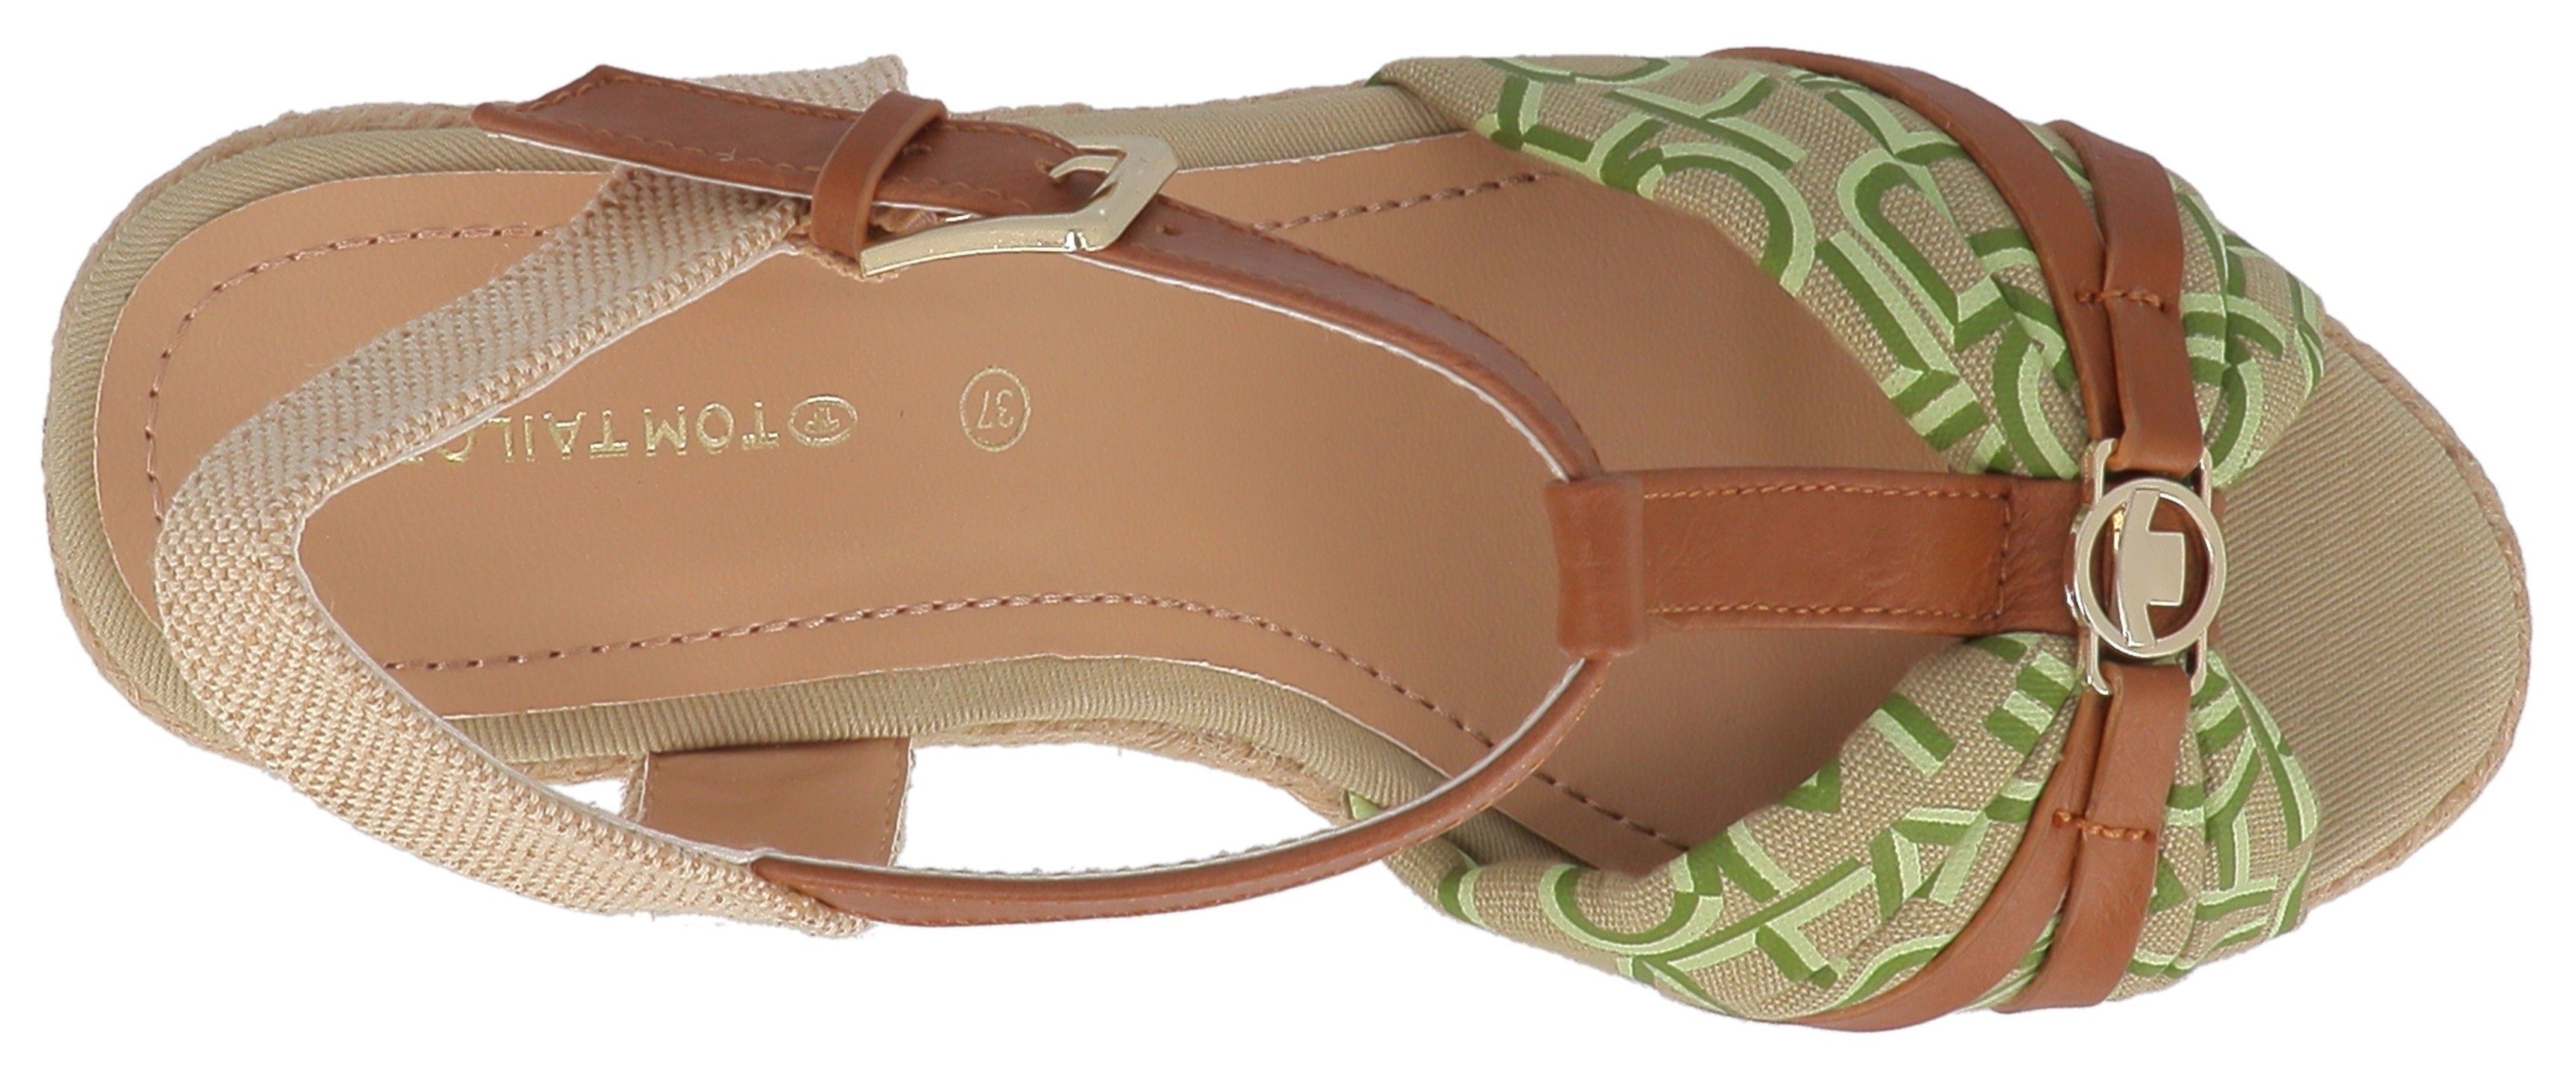 TOM TAILOR High-Heel-Sandalette braun-grün Bandage mit logobedruckter